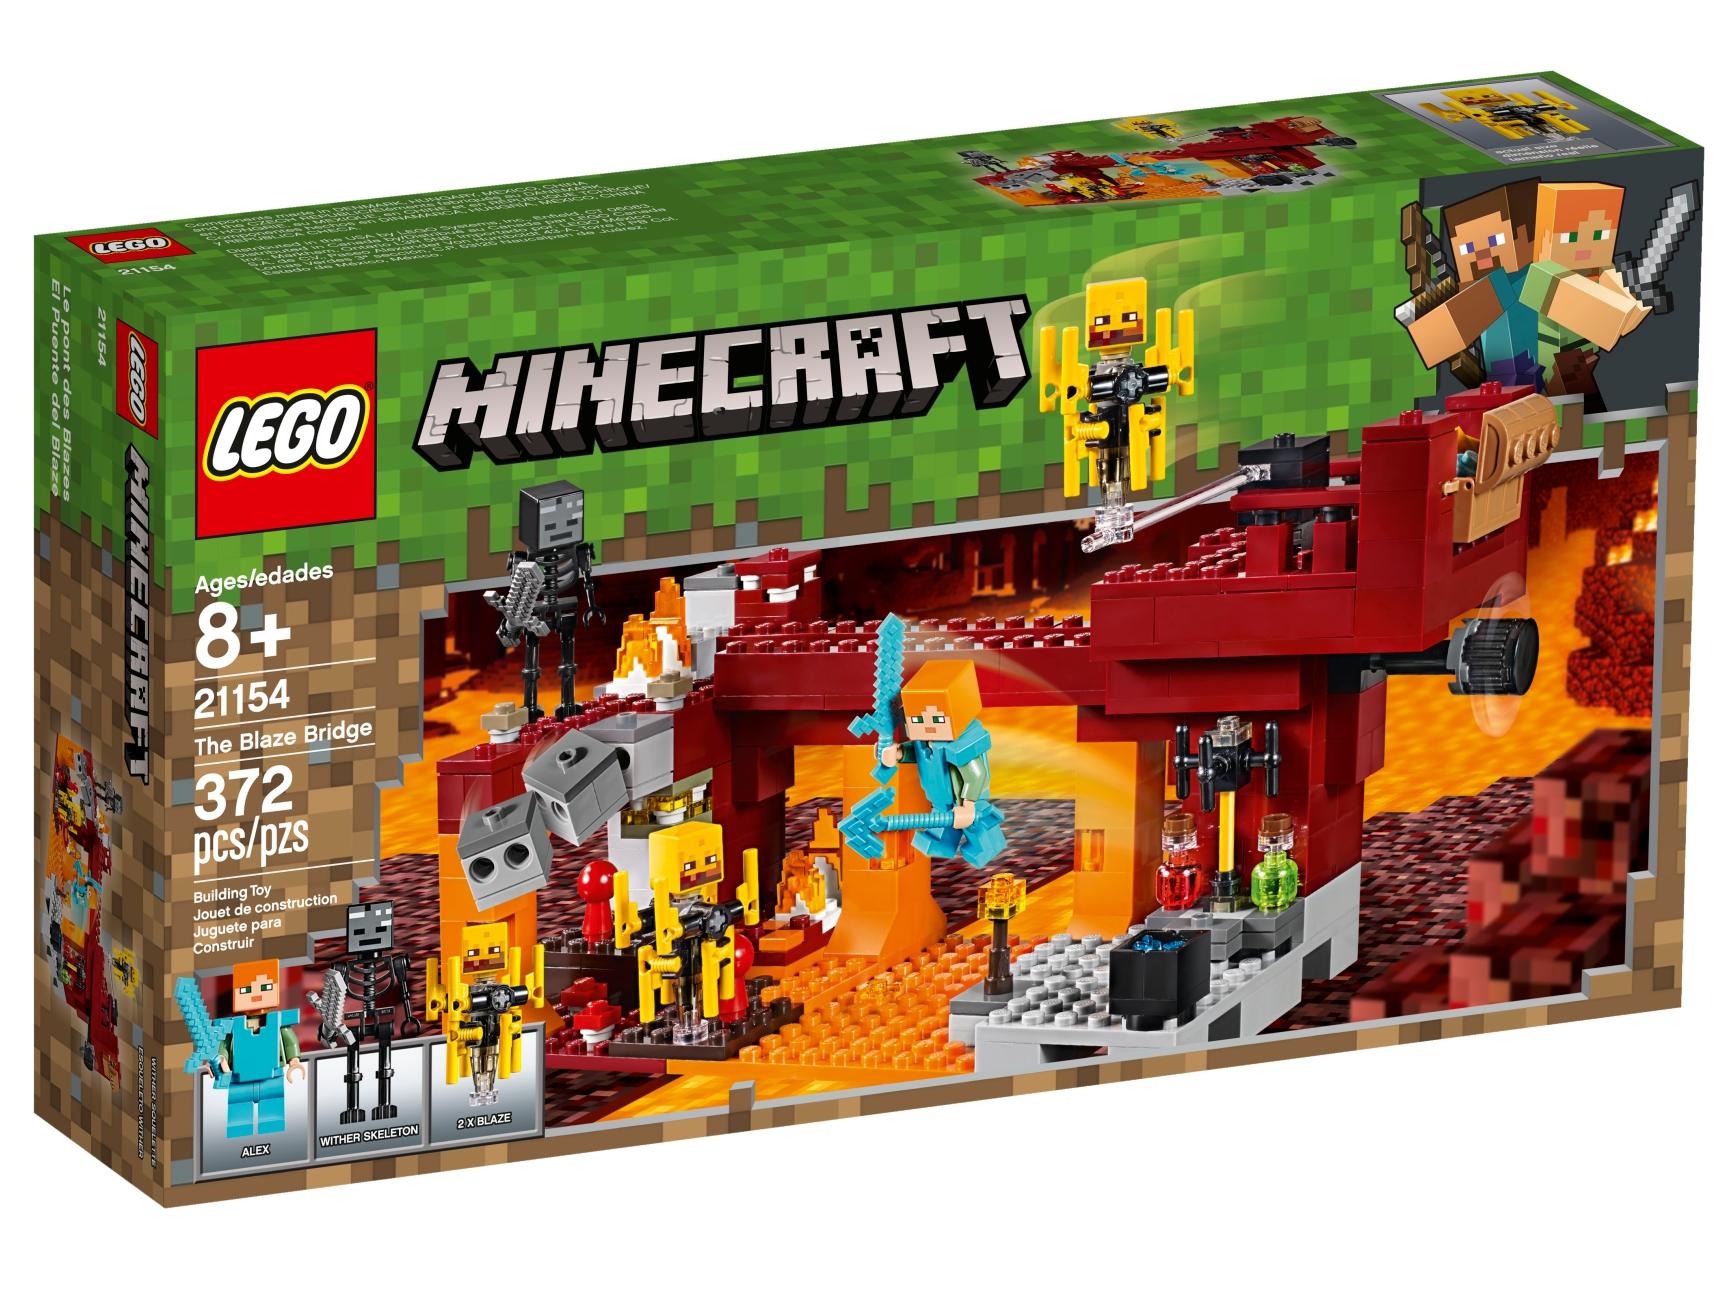 LEGO MINECRAFT WITHER SKELETON MINIFIGURE min025 USED w/SWORD